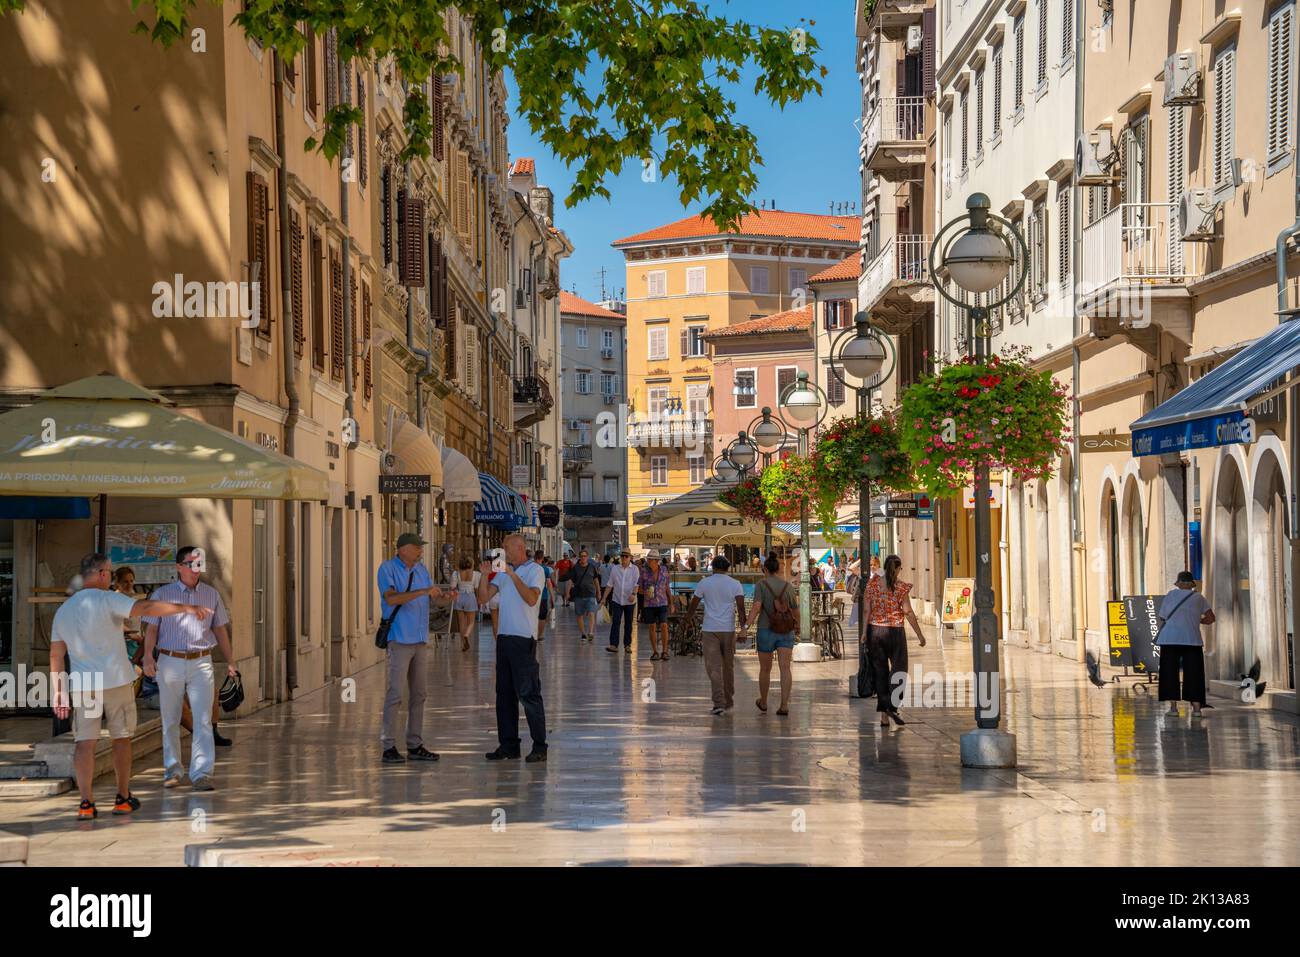 View of shops, people and ornate architecture on the Korzo, Rijeka, Kvarner Bay, Croatia, Europe Stock Photo